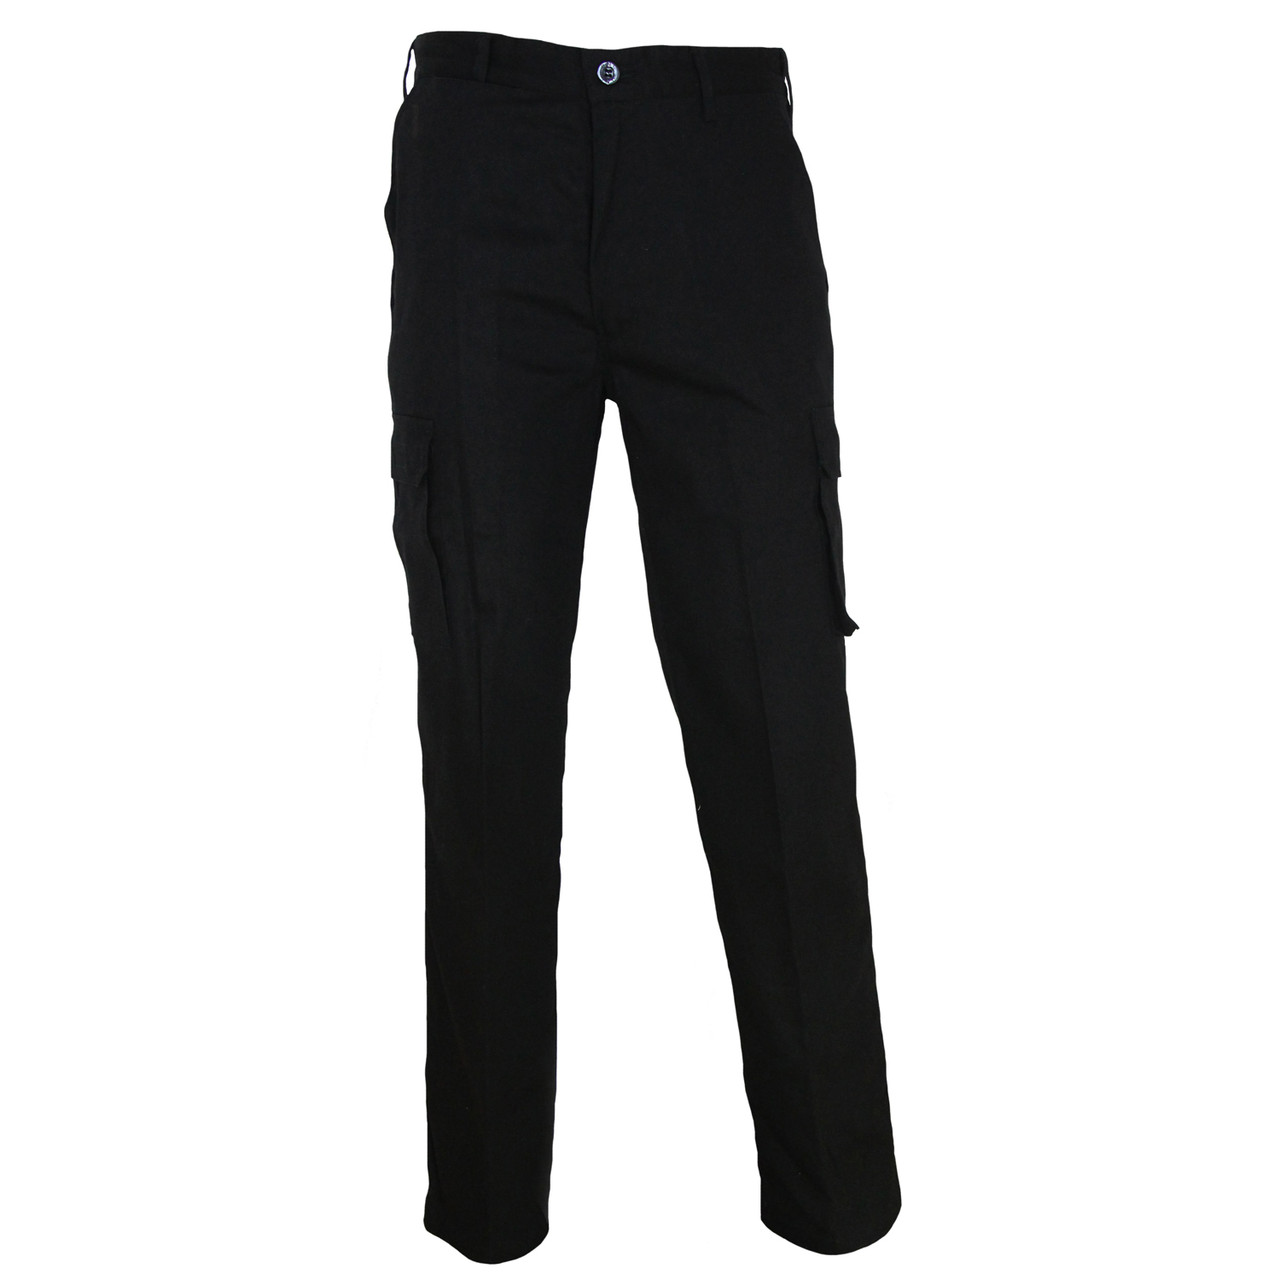 3316 - Lightweight Cotton Cargo Pants - DNC Workwear 2U